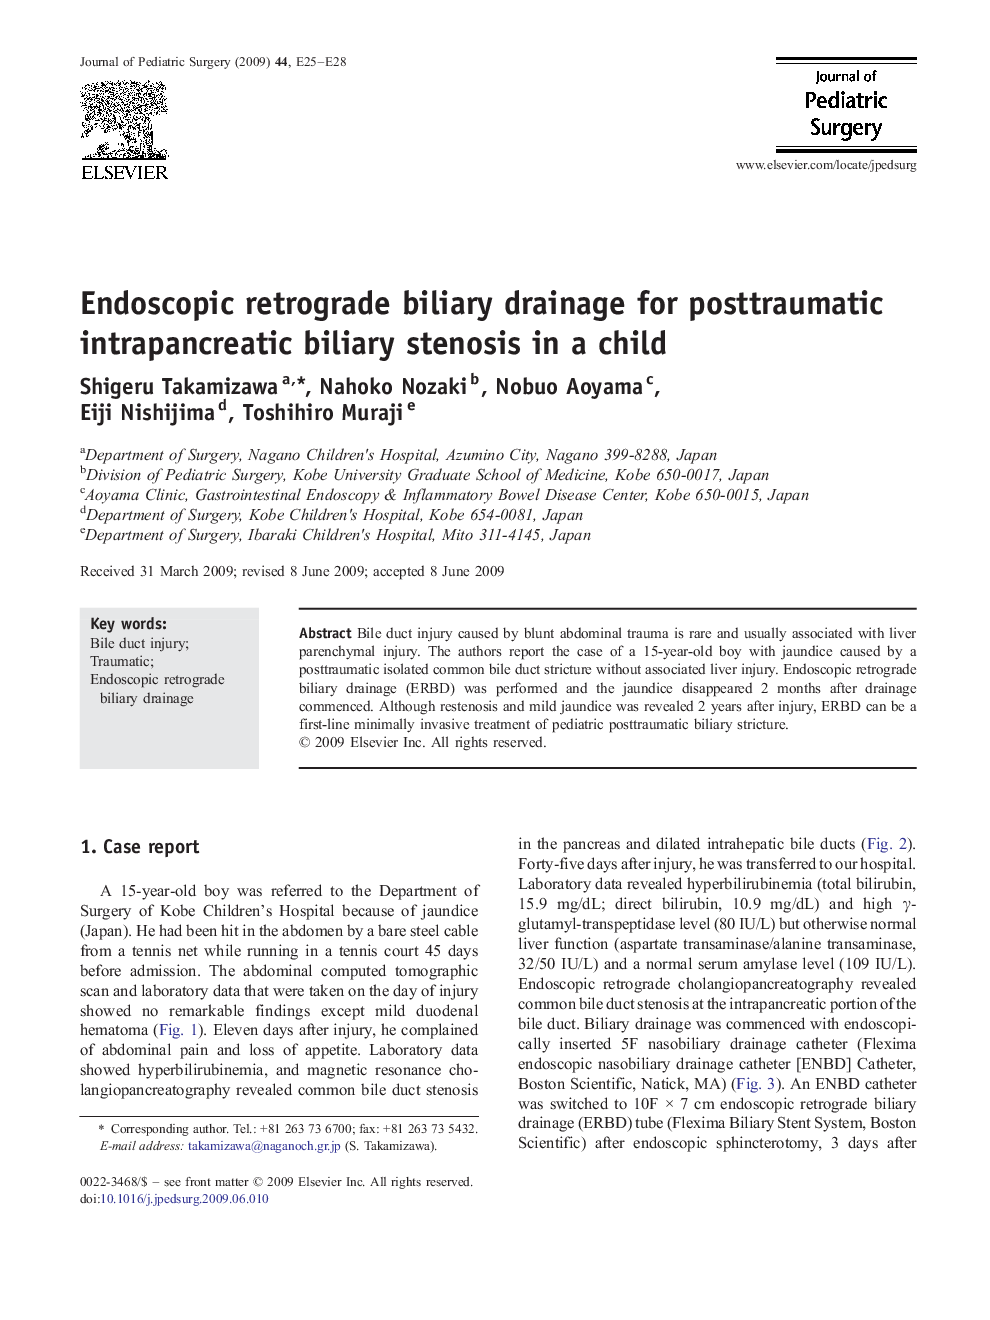 Endoscopic retrograde biliary drainage for posttraumatic intrapancreatic biliary stenosis in a child